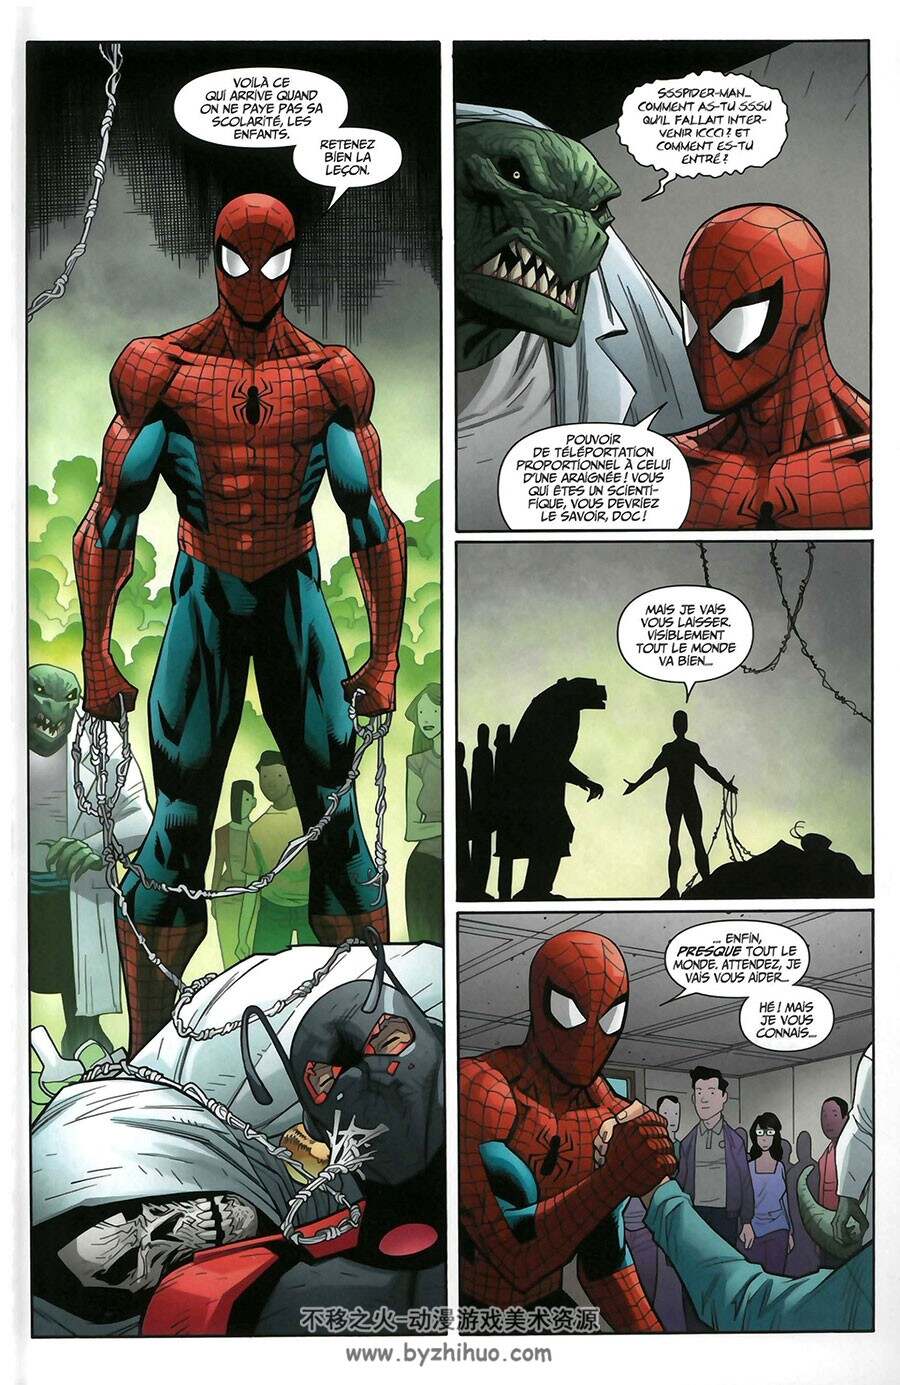 Spider Man - Fresh Start - Réécrivons L'avenir 第2册 David Williams - Joe Quinones